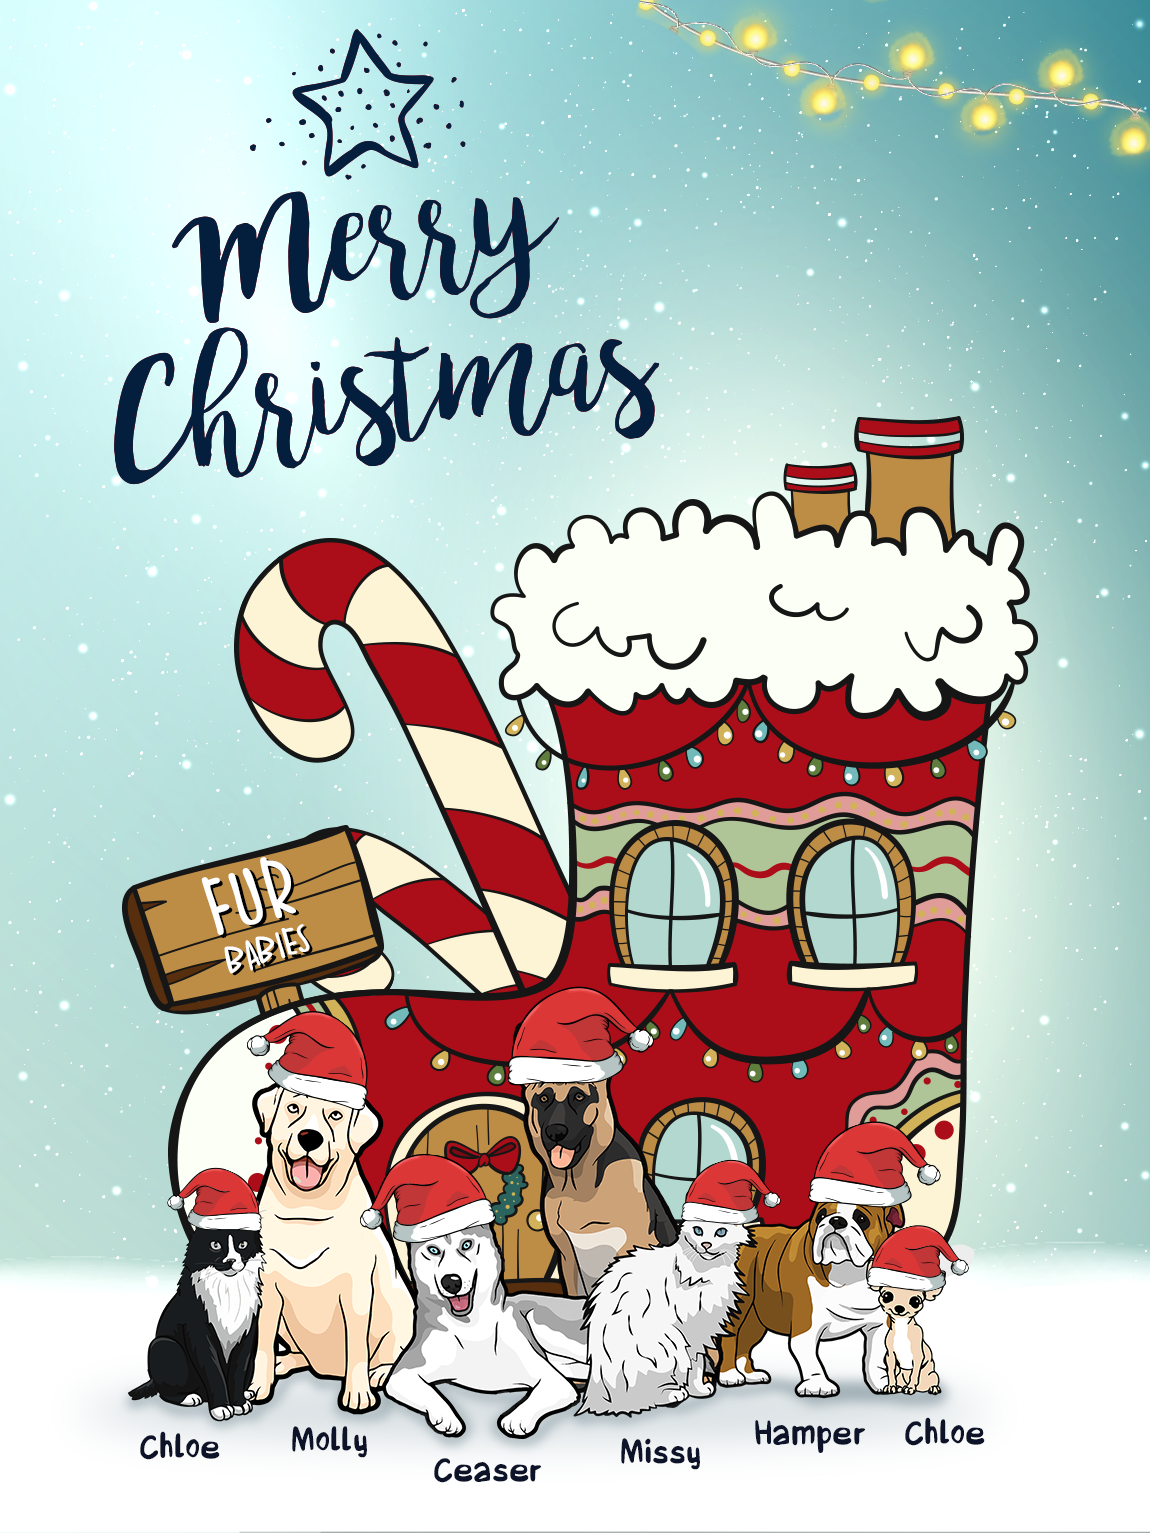 Wallpaper Design 13 Wishing Merry Christmas (Digital Image only)